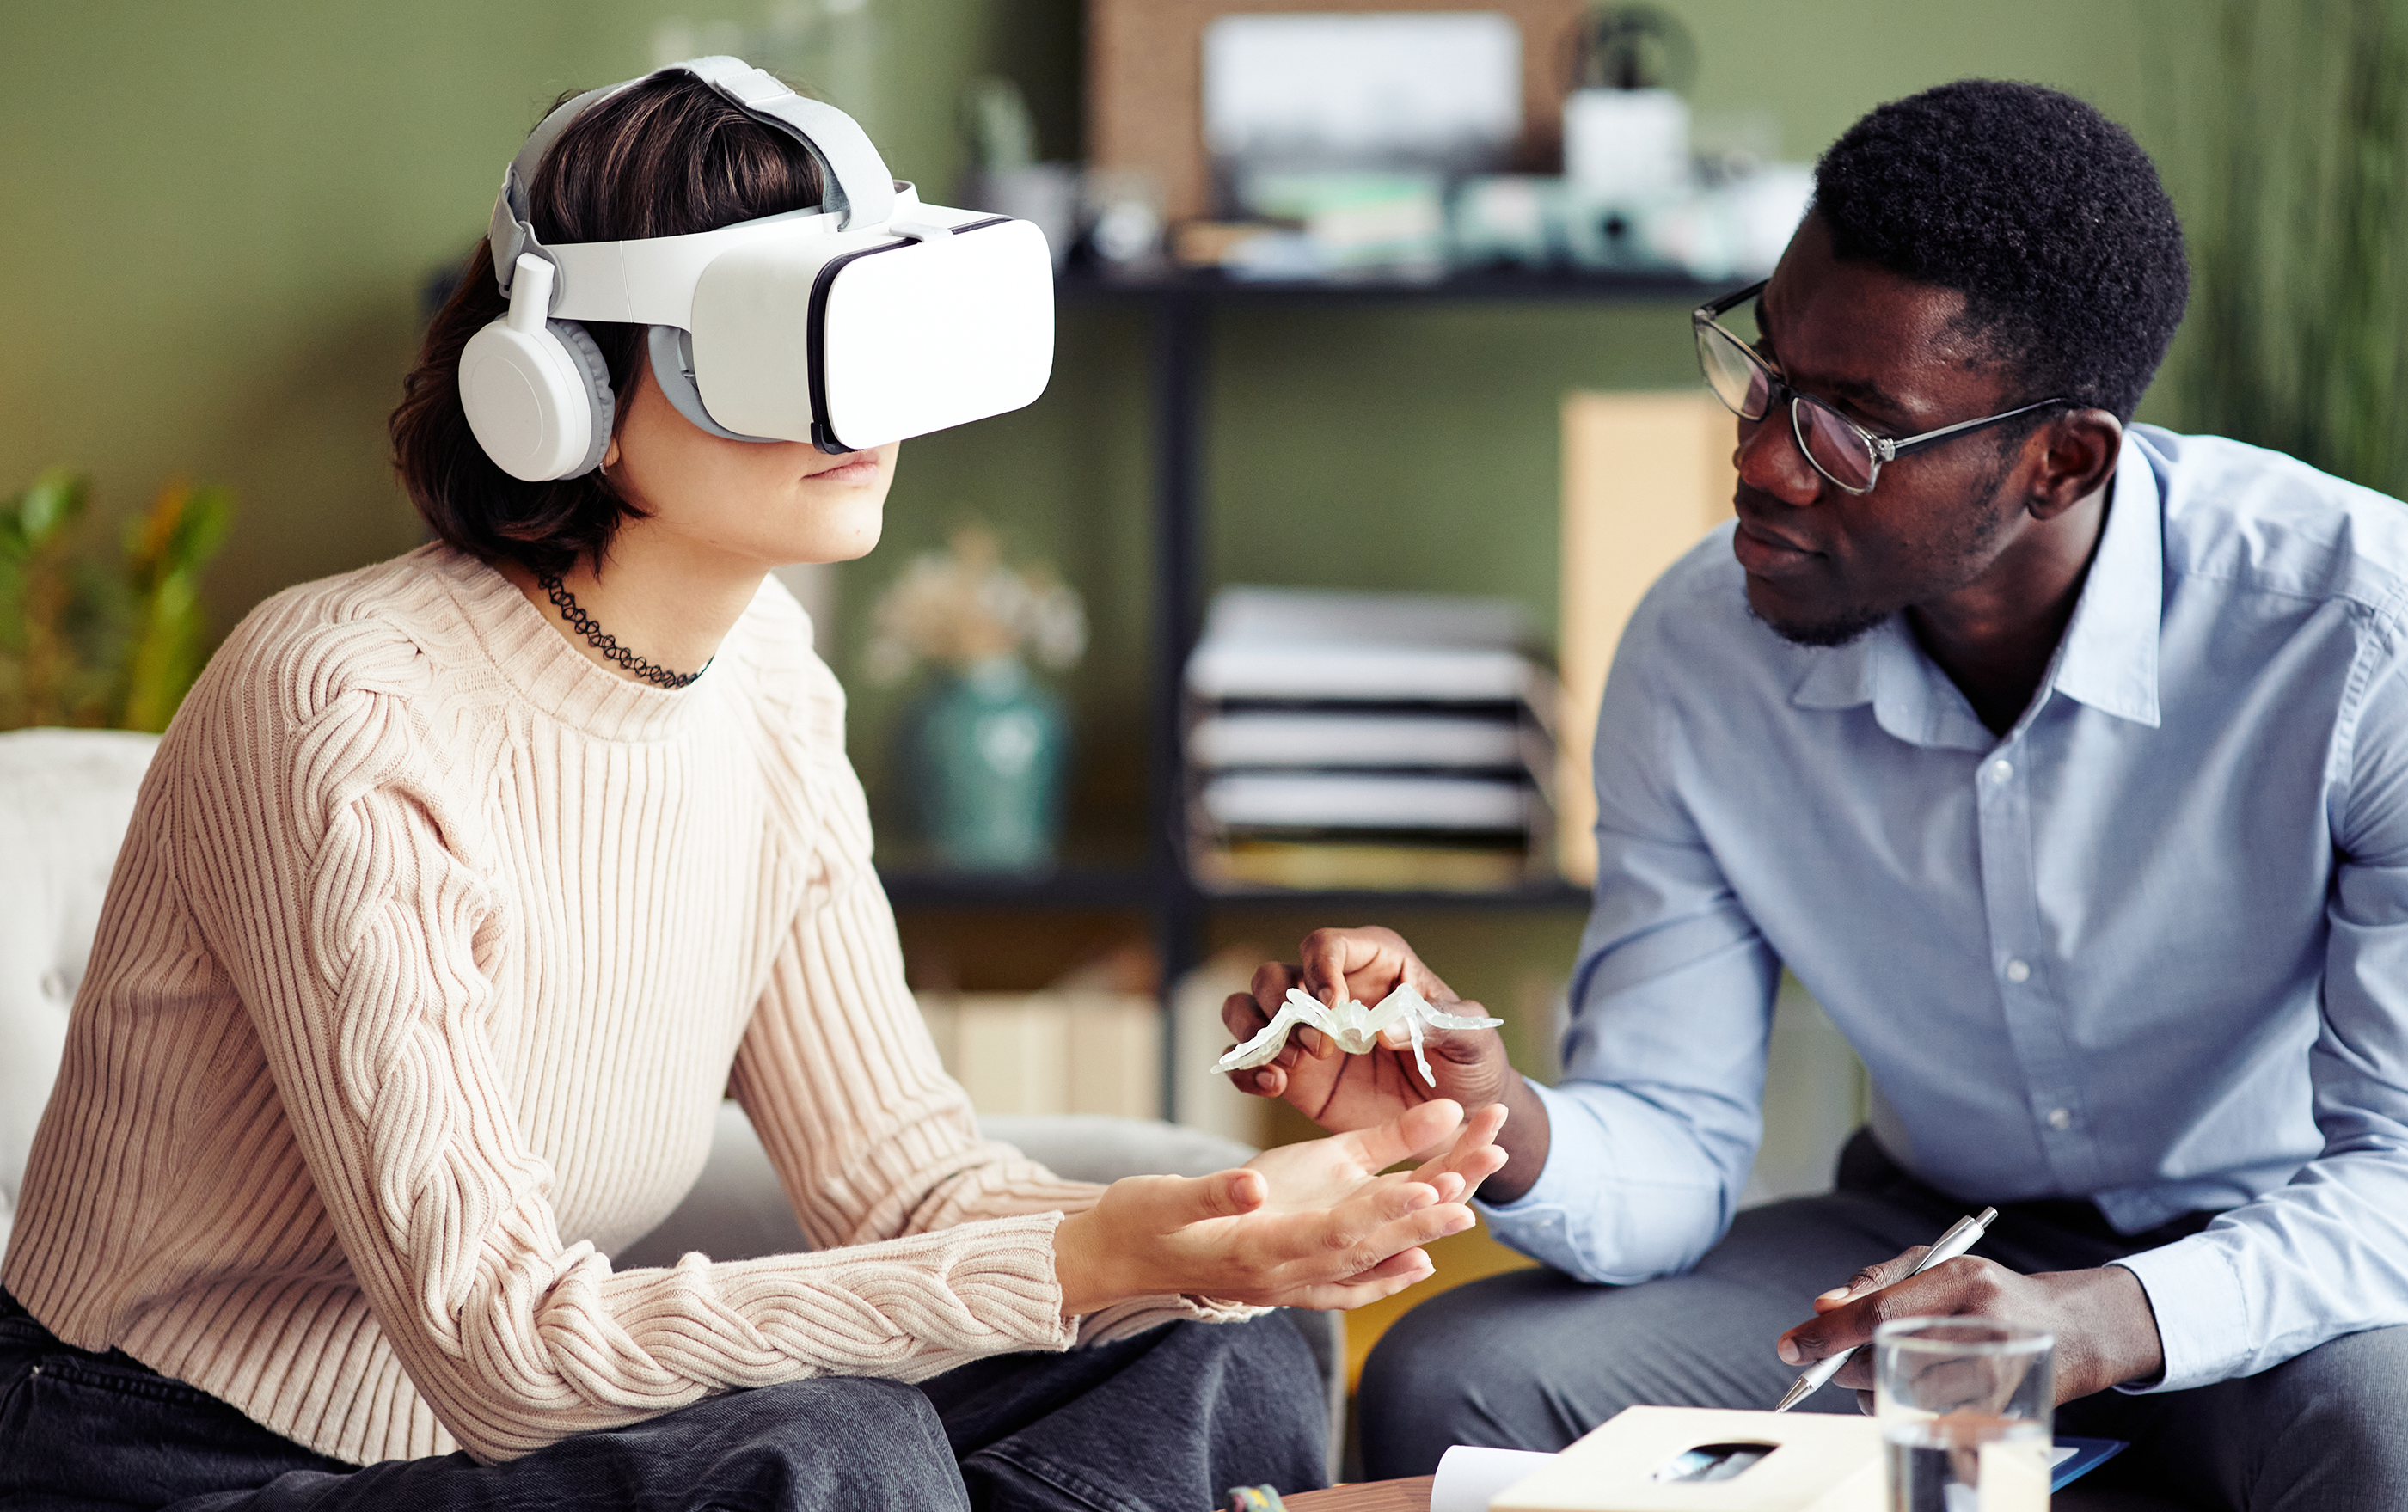 Virtual reality for chronic pain relief - Harvard Health